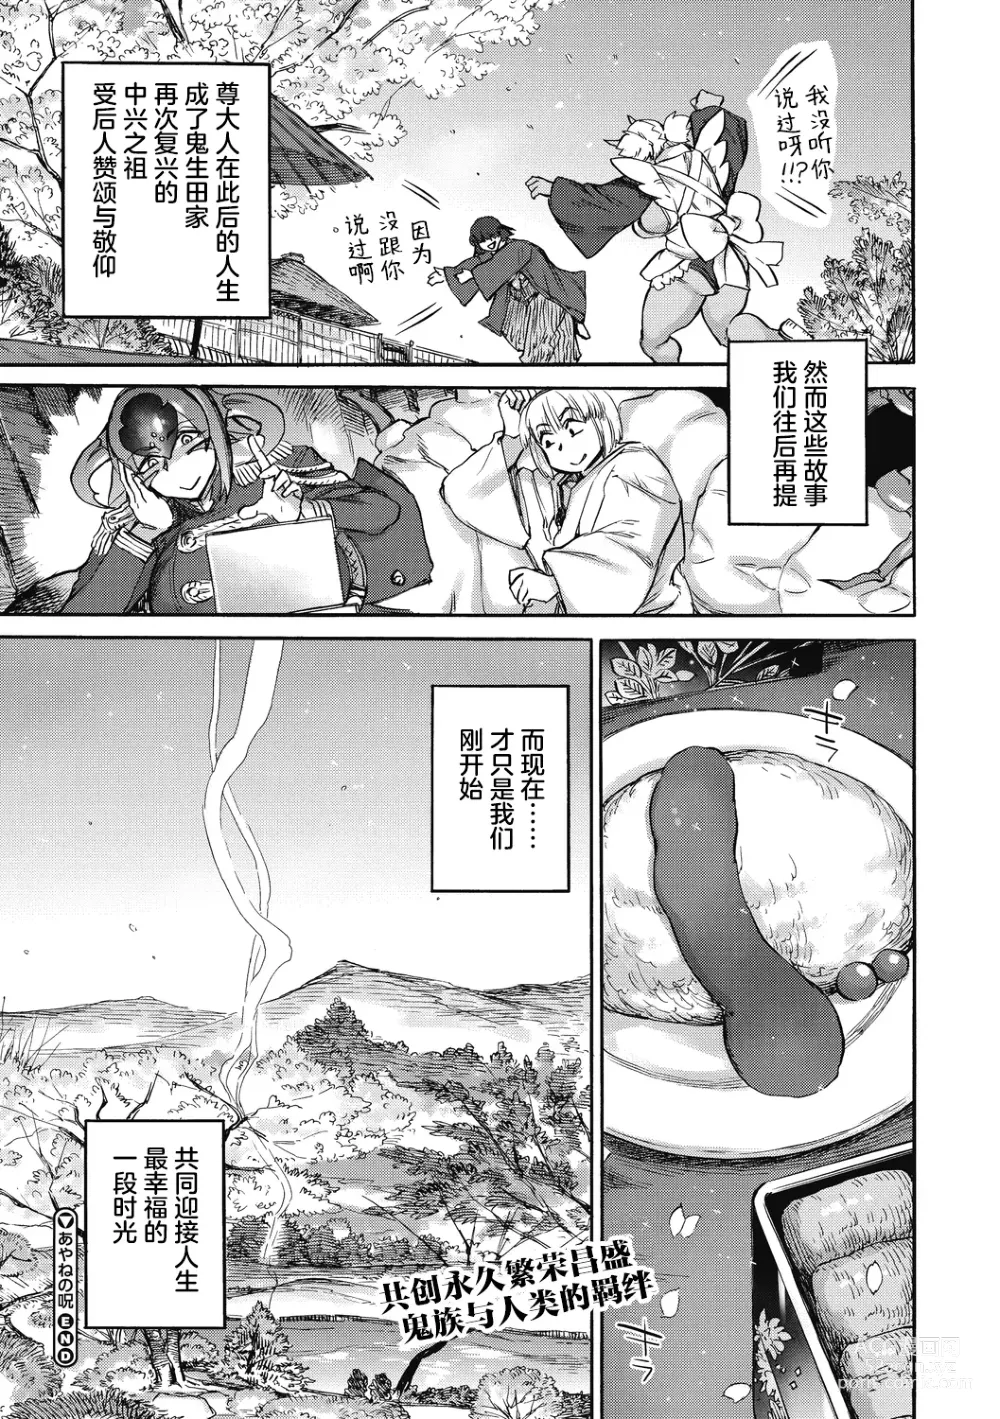 Page 31 of manga Ayame no Noroi